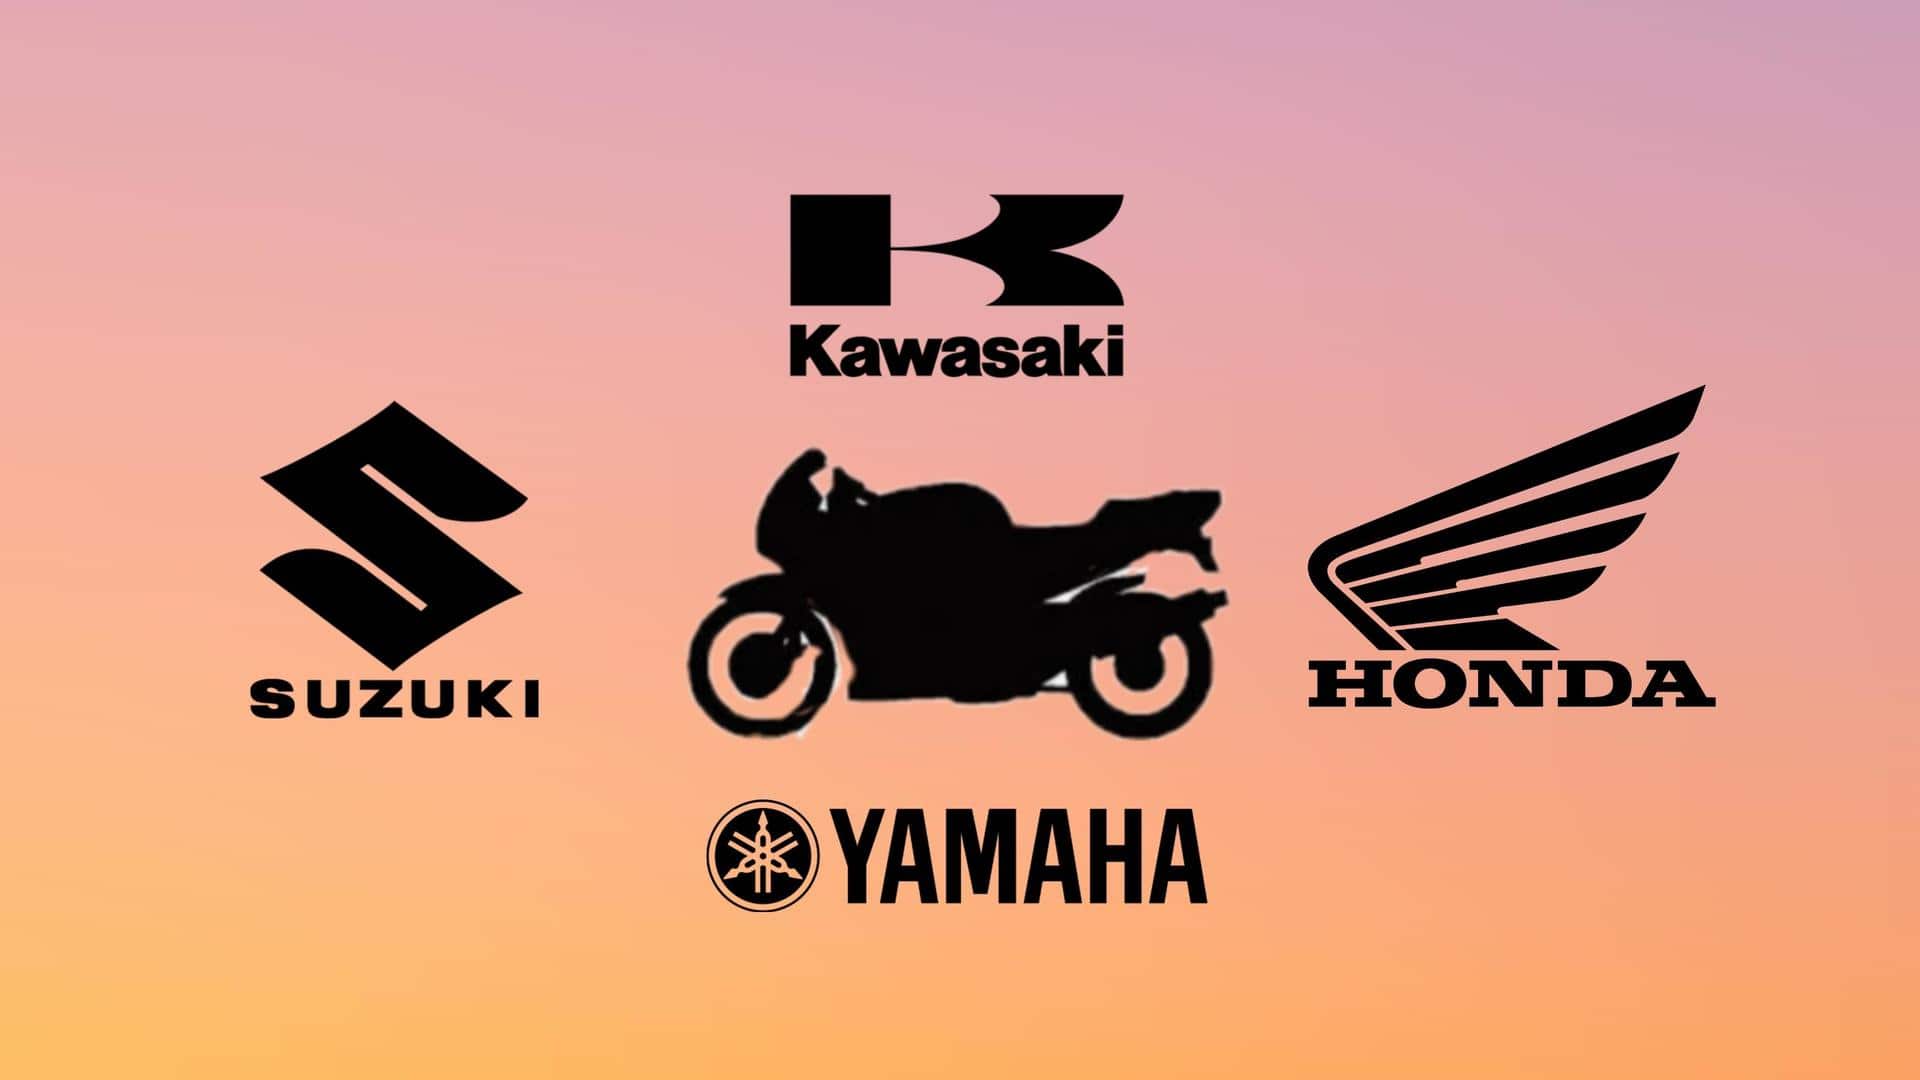 Honda, Suzuki, Yamaha, and Kawasaki to develop hydrogen-powered engines